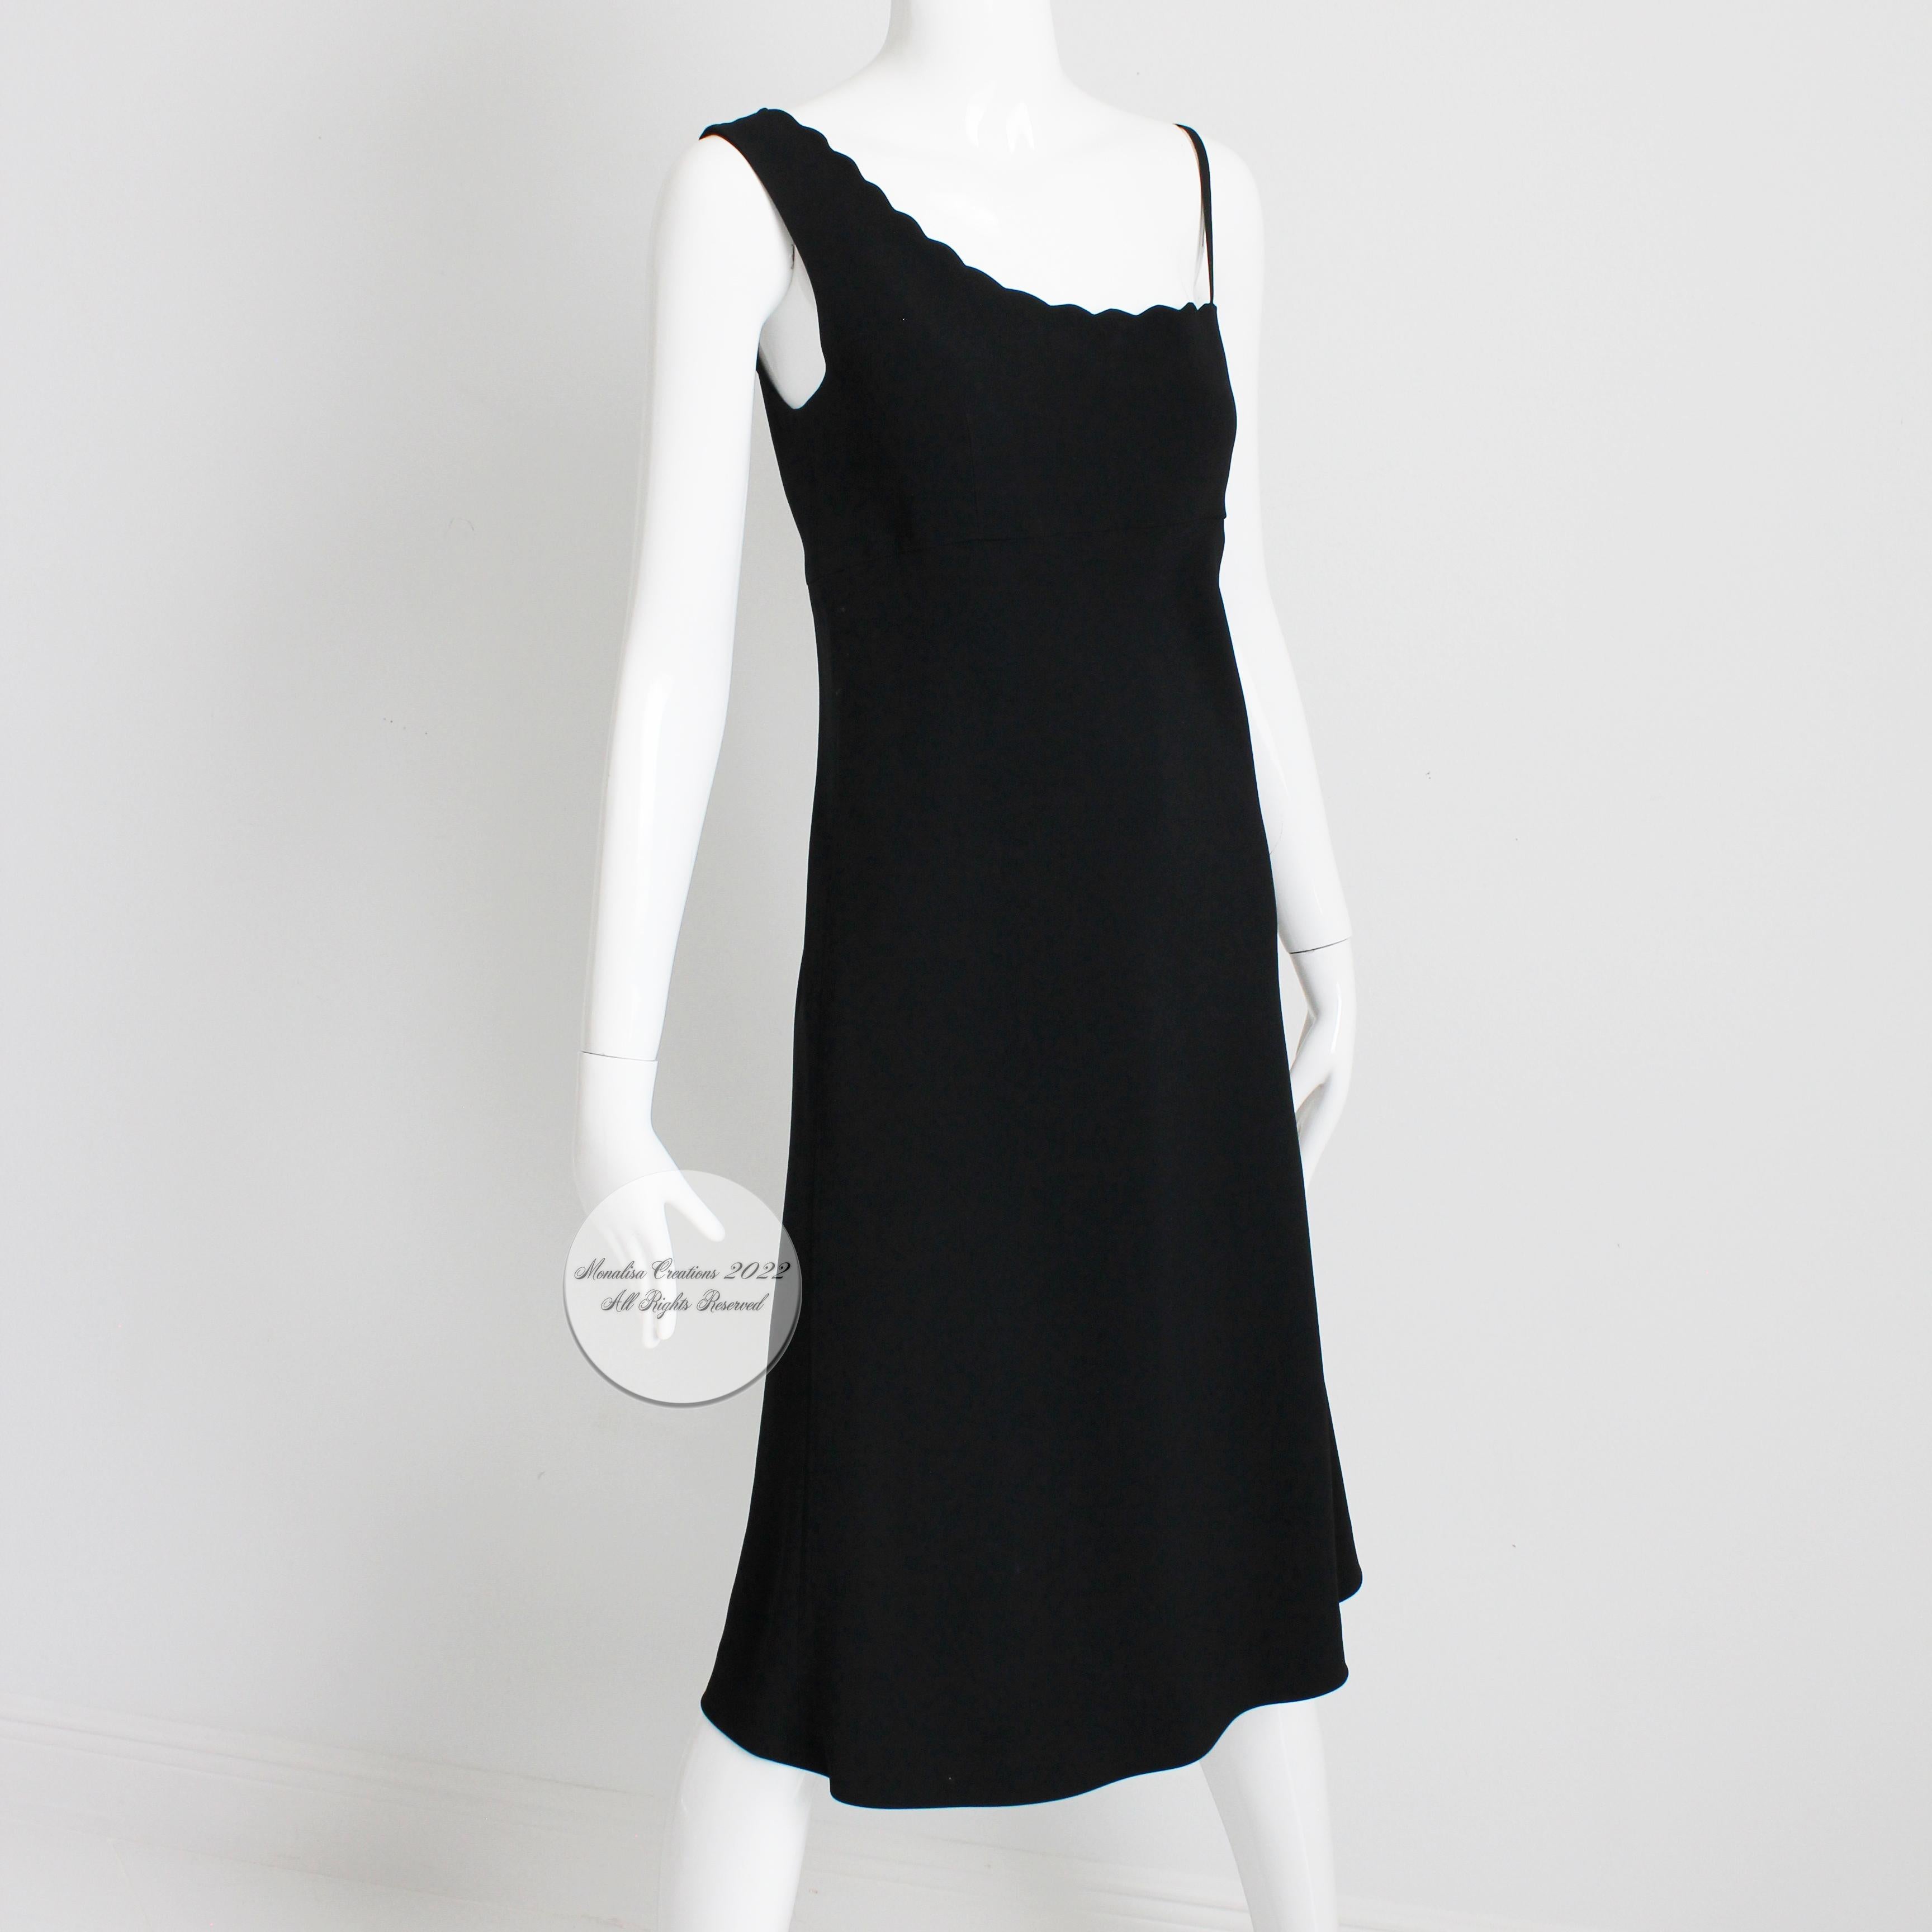 Sonia Rykiel Dress One Shoulder Scallop Collar Little Black Dress Vintage 90s  1